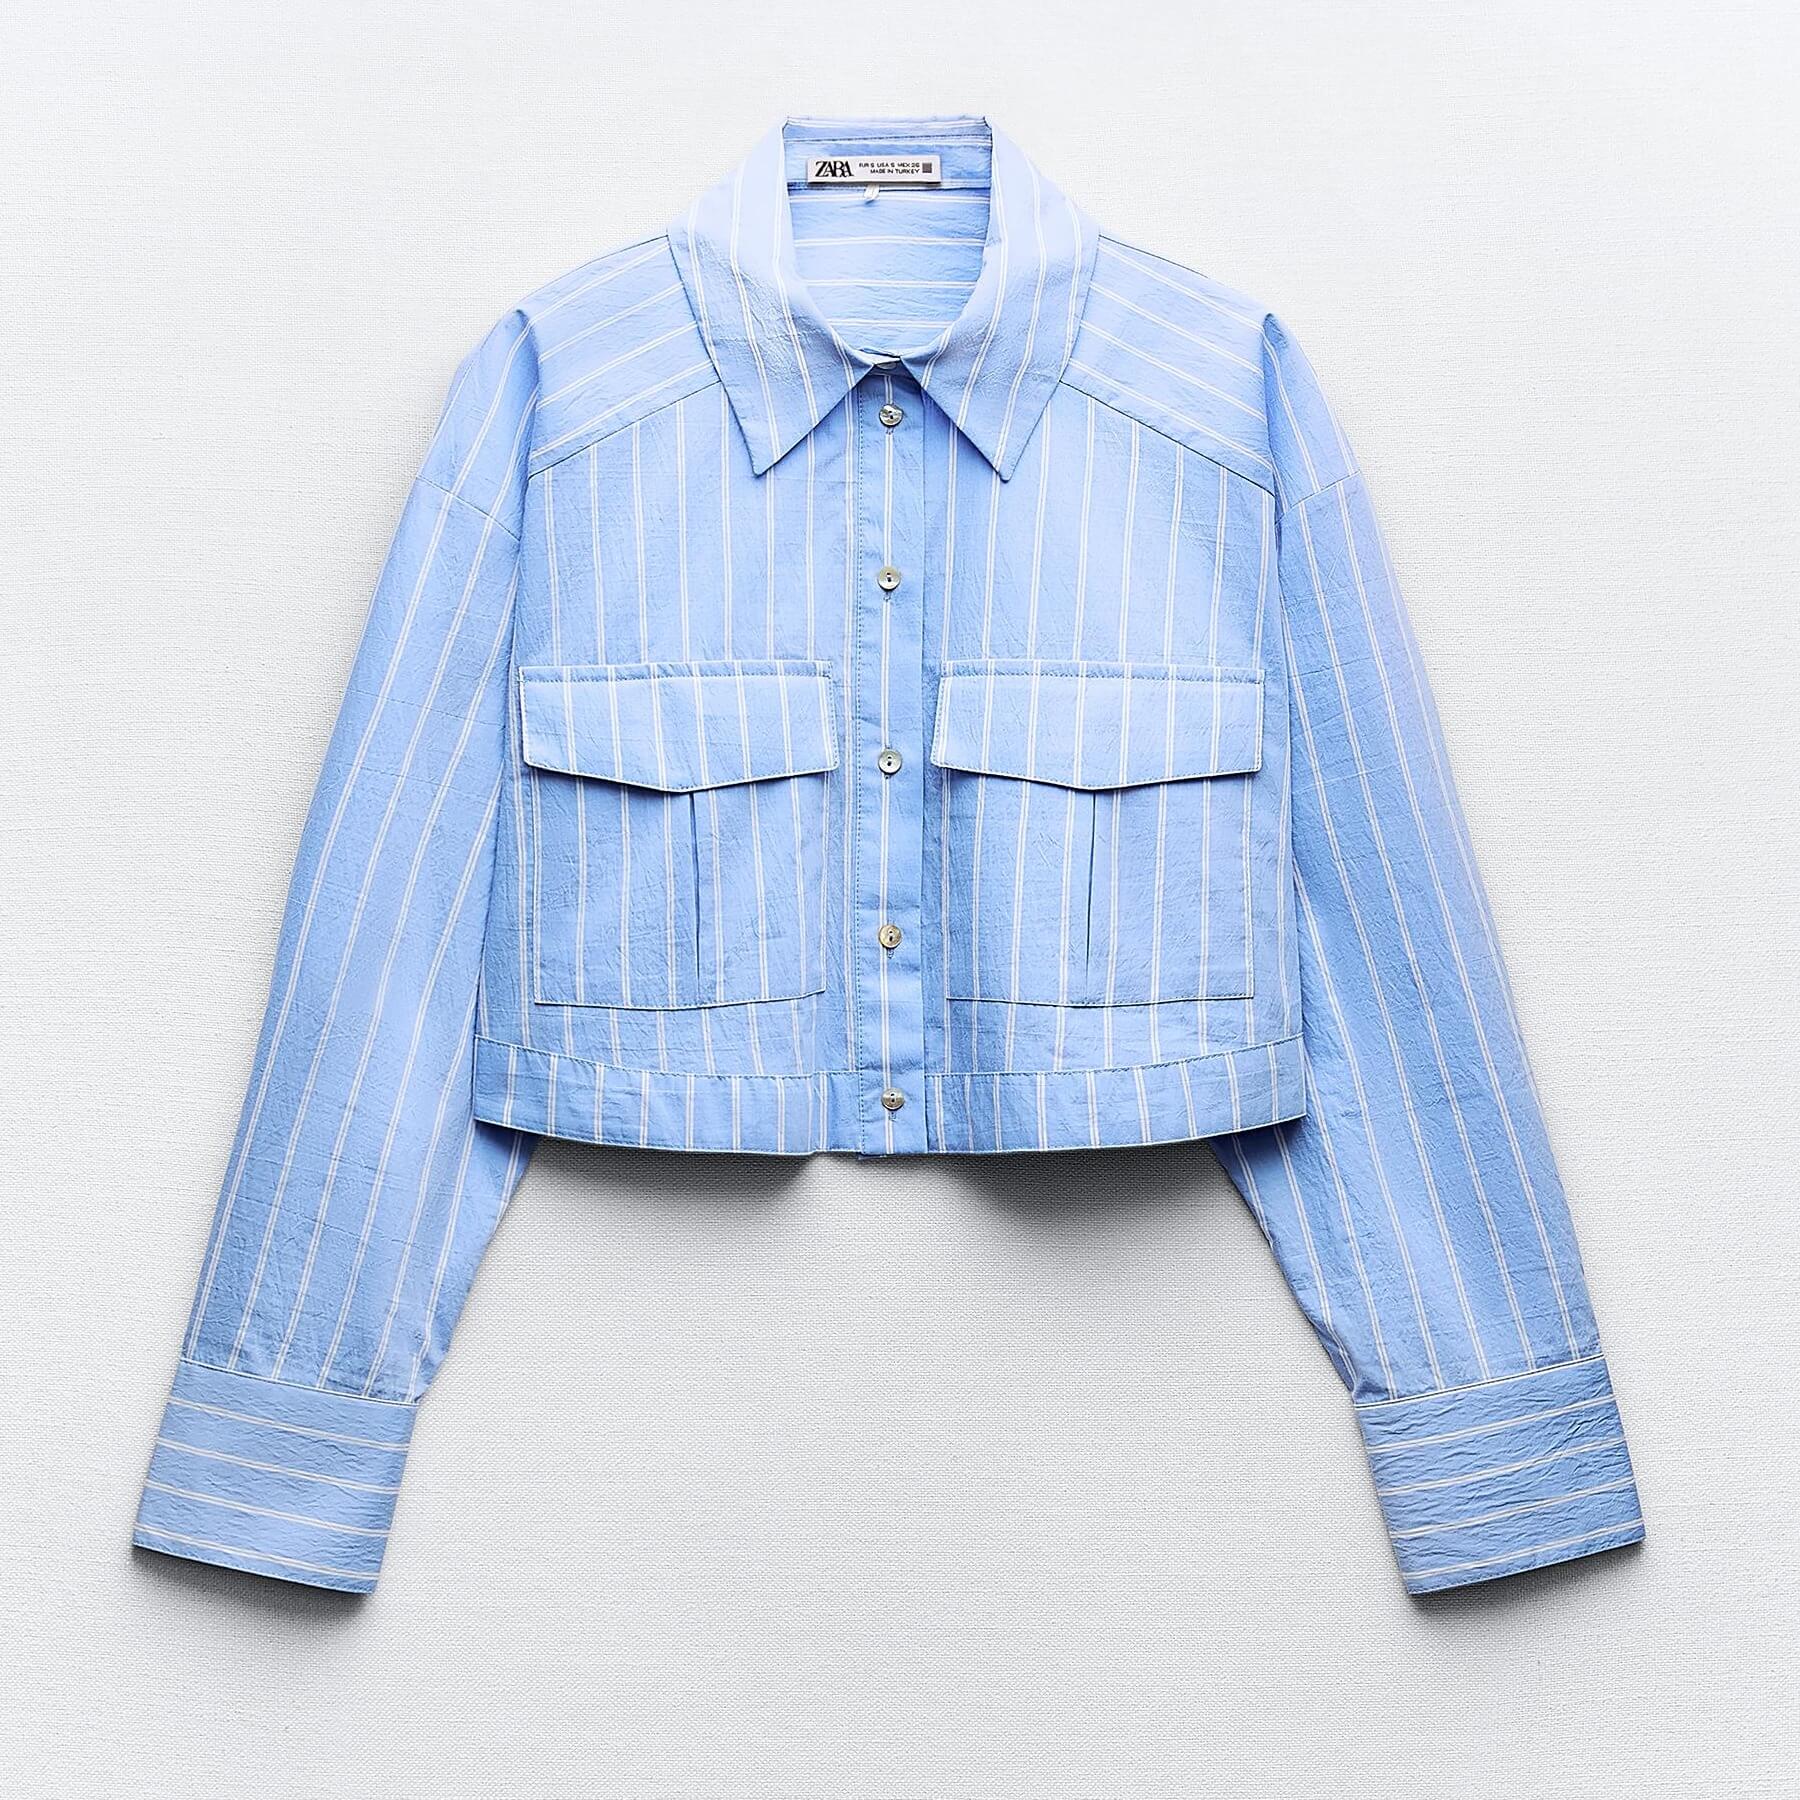 Рубашка Zara Cropped Striped, голубой/белый рубашка zara striped shirt голубой желтовато белый